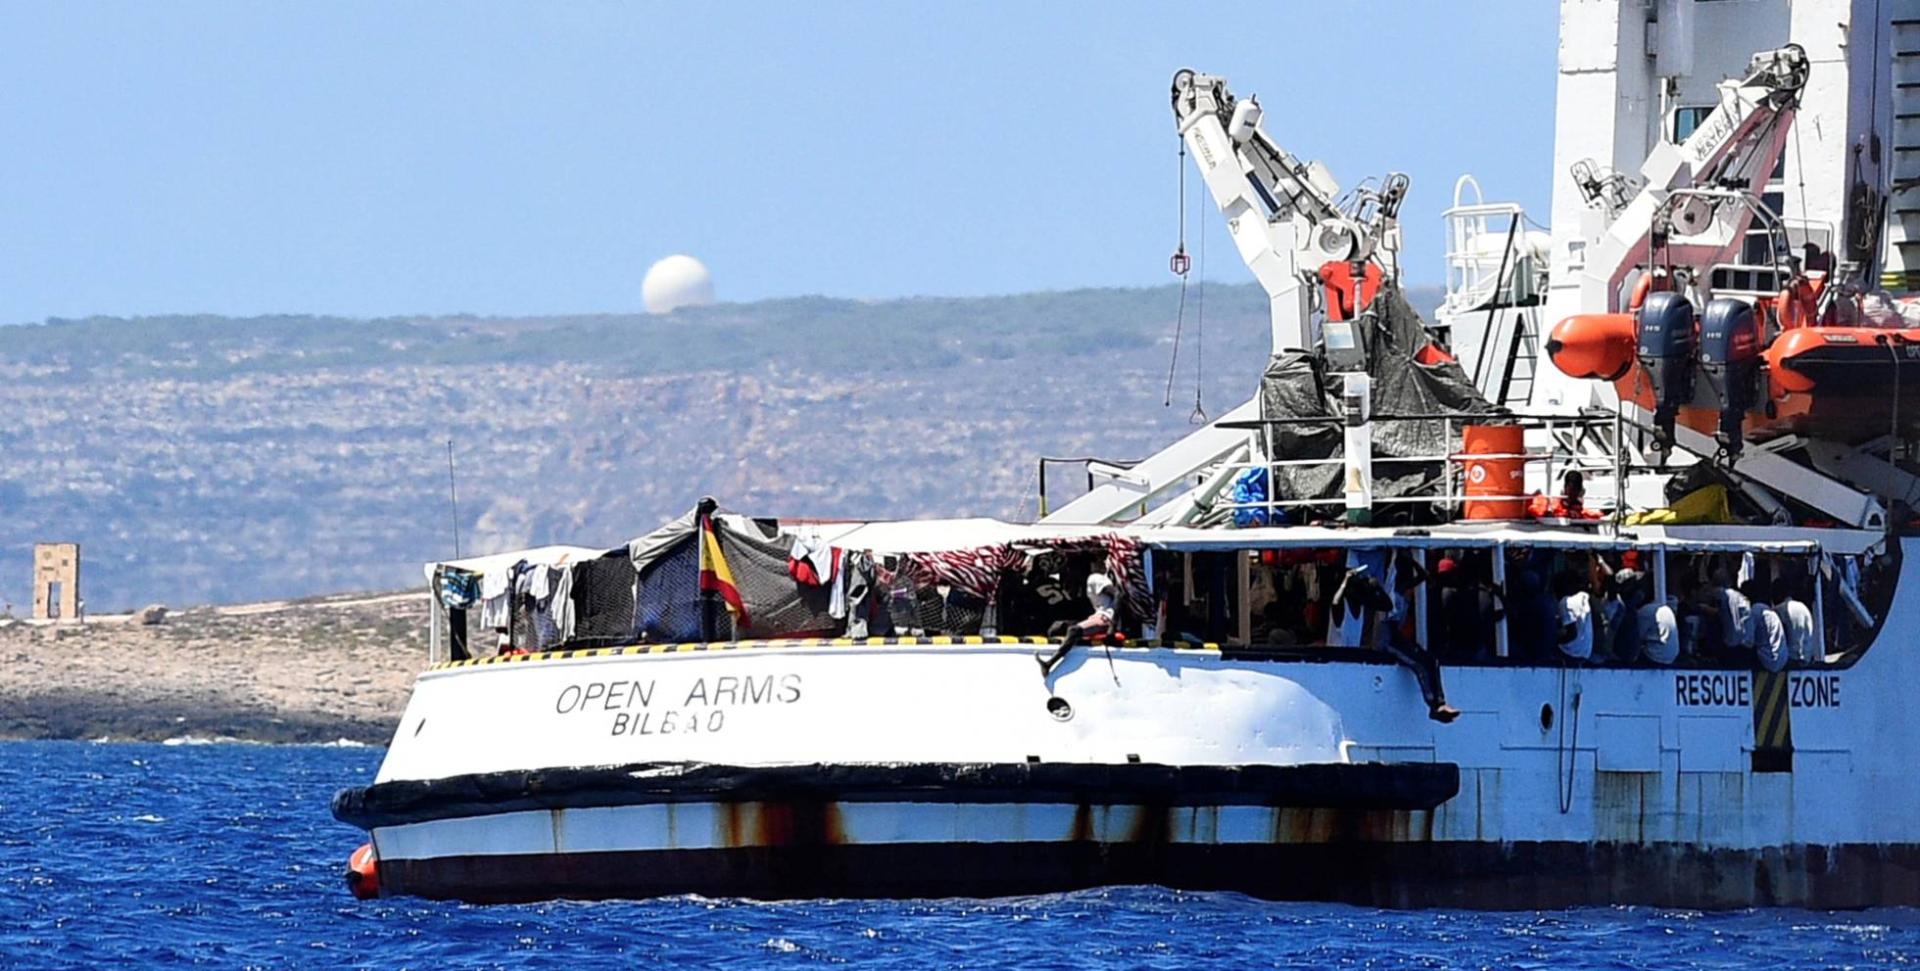 Italian prosecutor orders seizure of Open Arms rescue boat